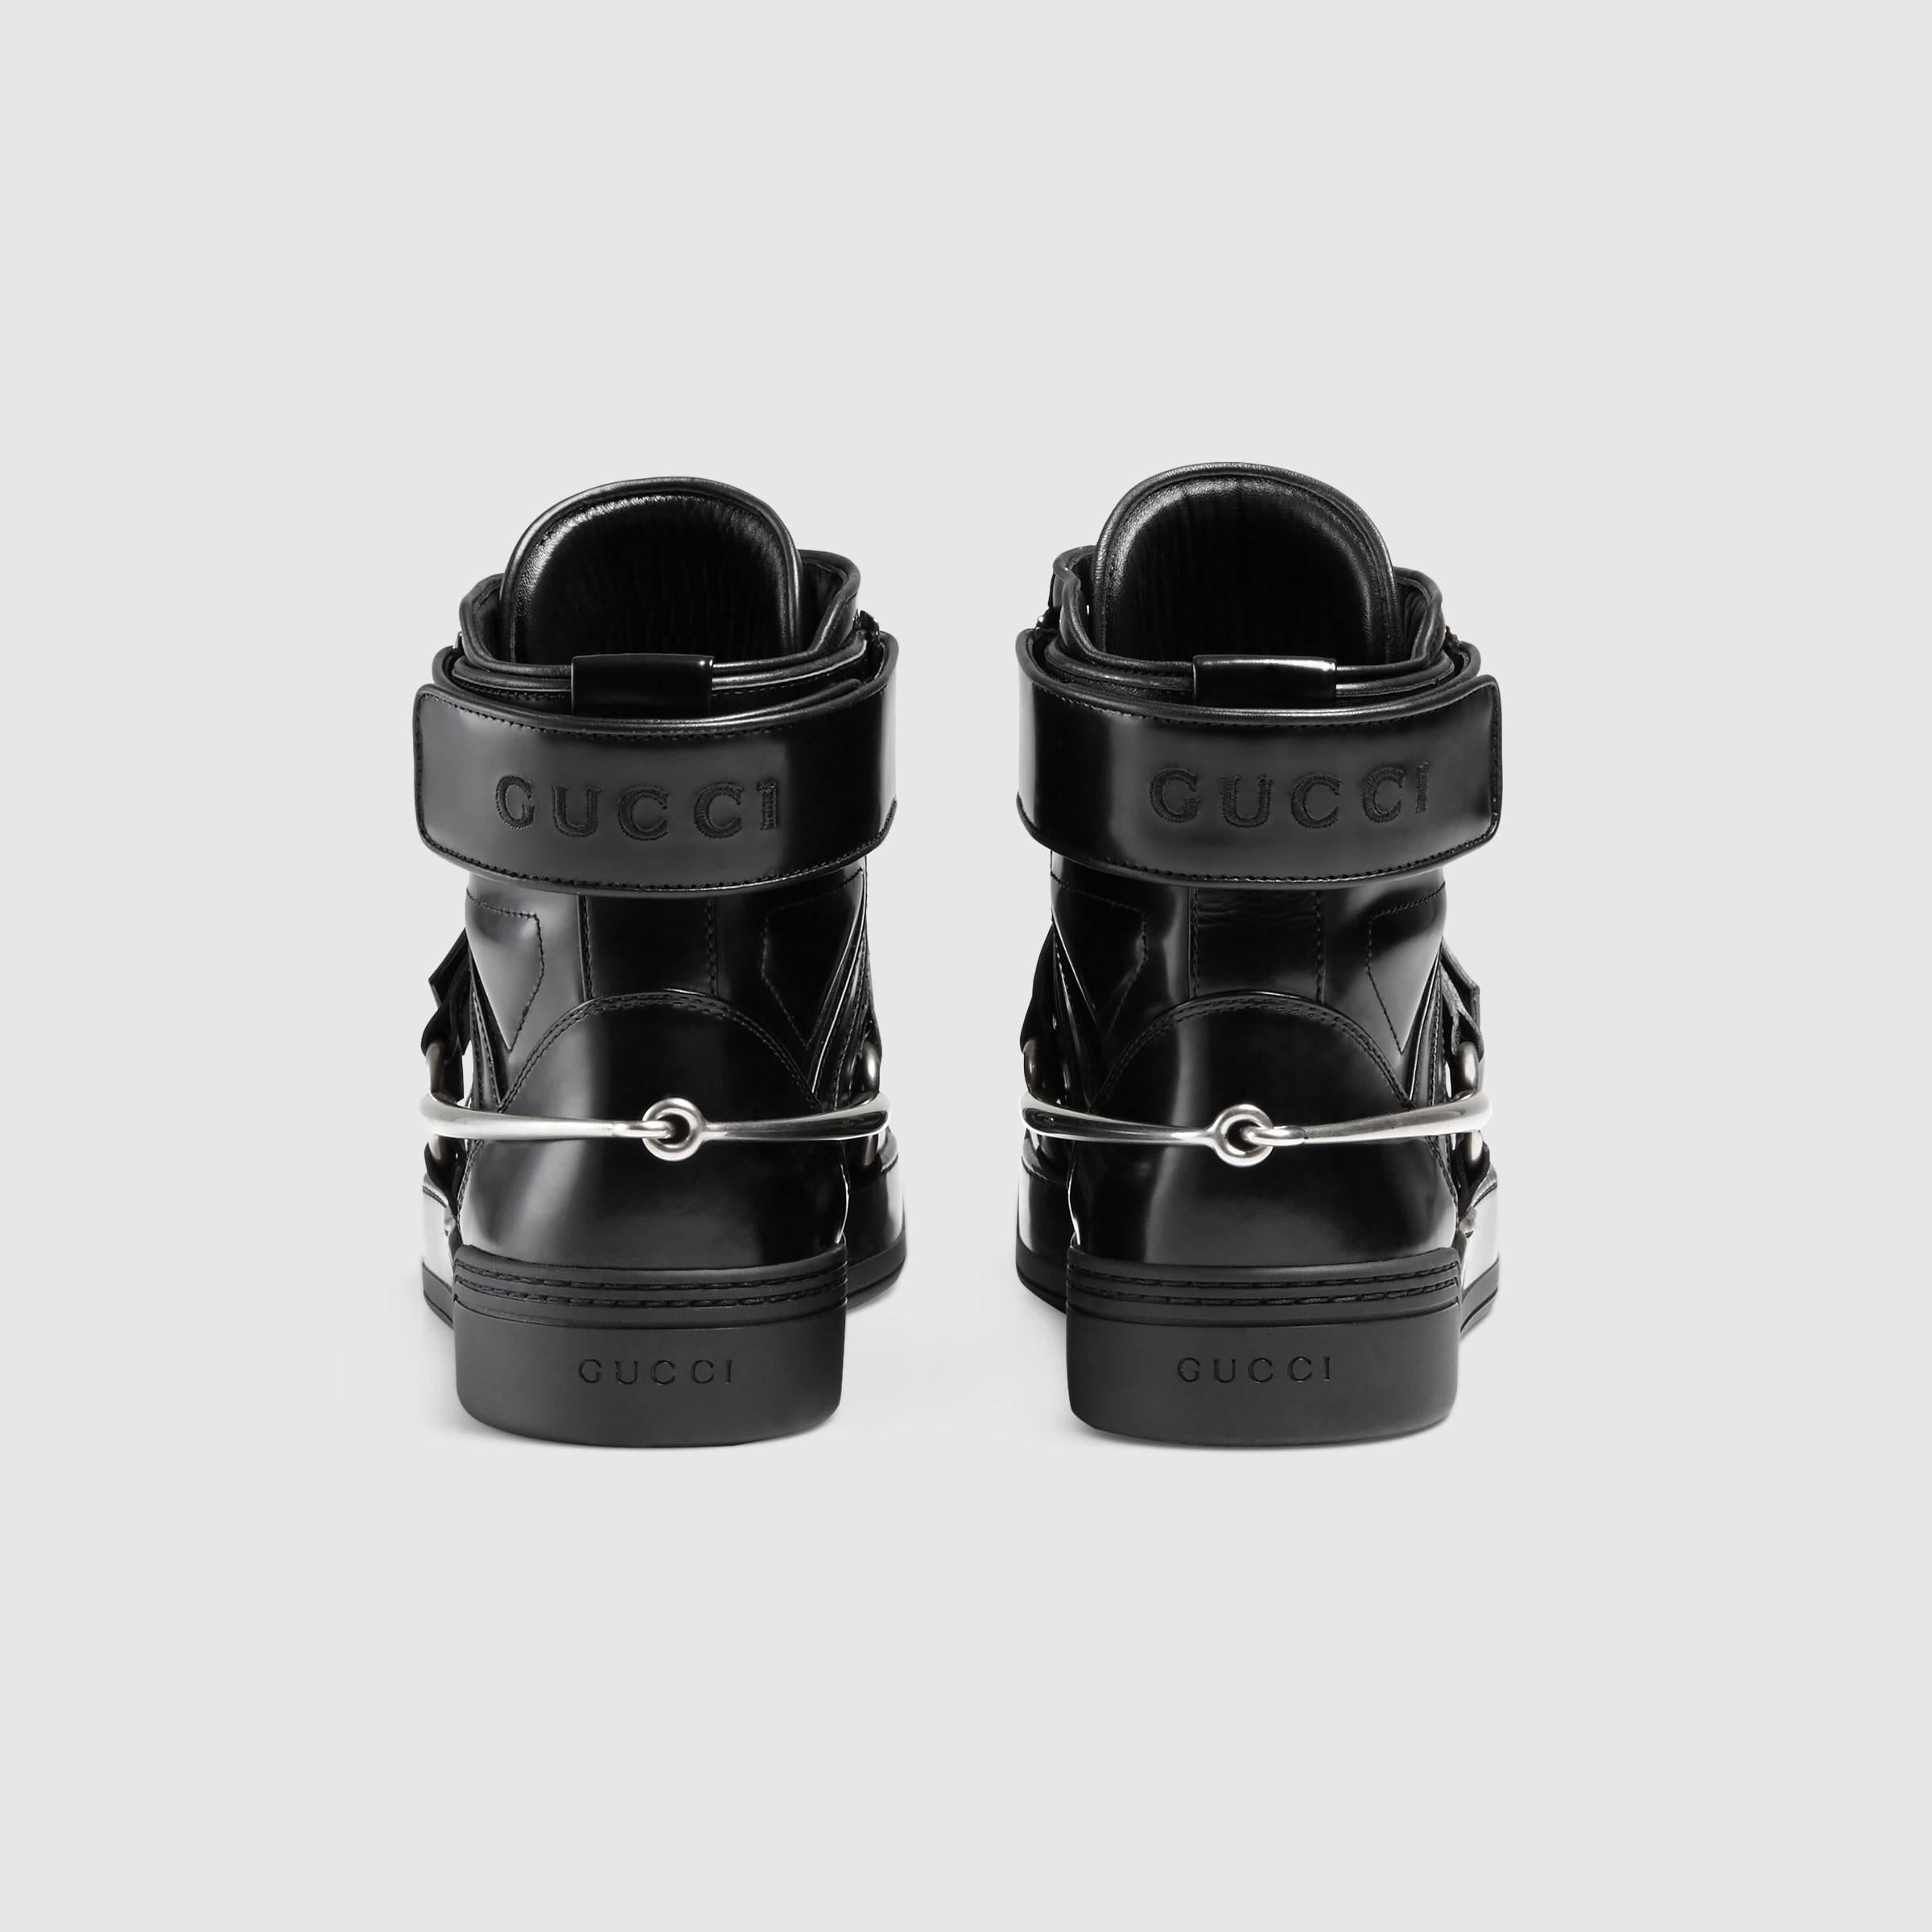 New Gucci Men's Black *Basket Darko* High-Top Sneaker Gucci sizes 8.5  9  9.5 3